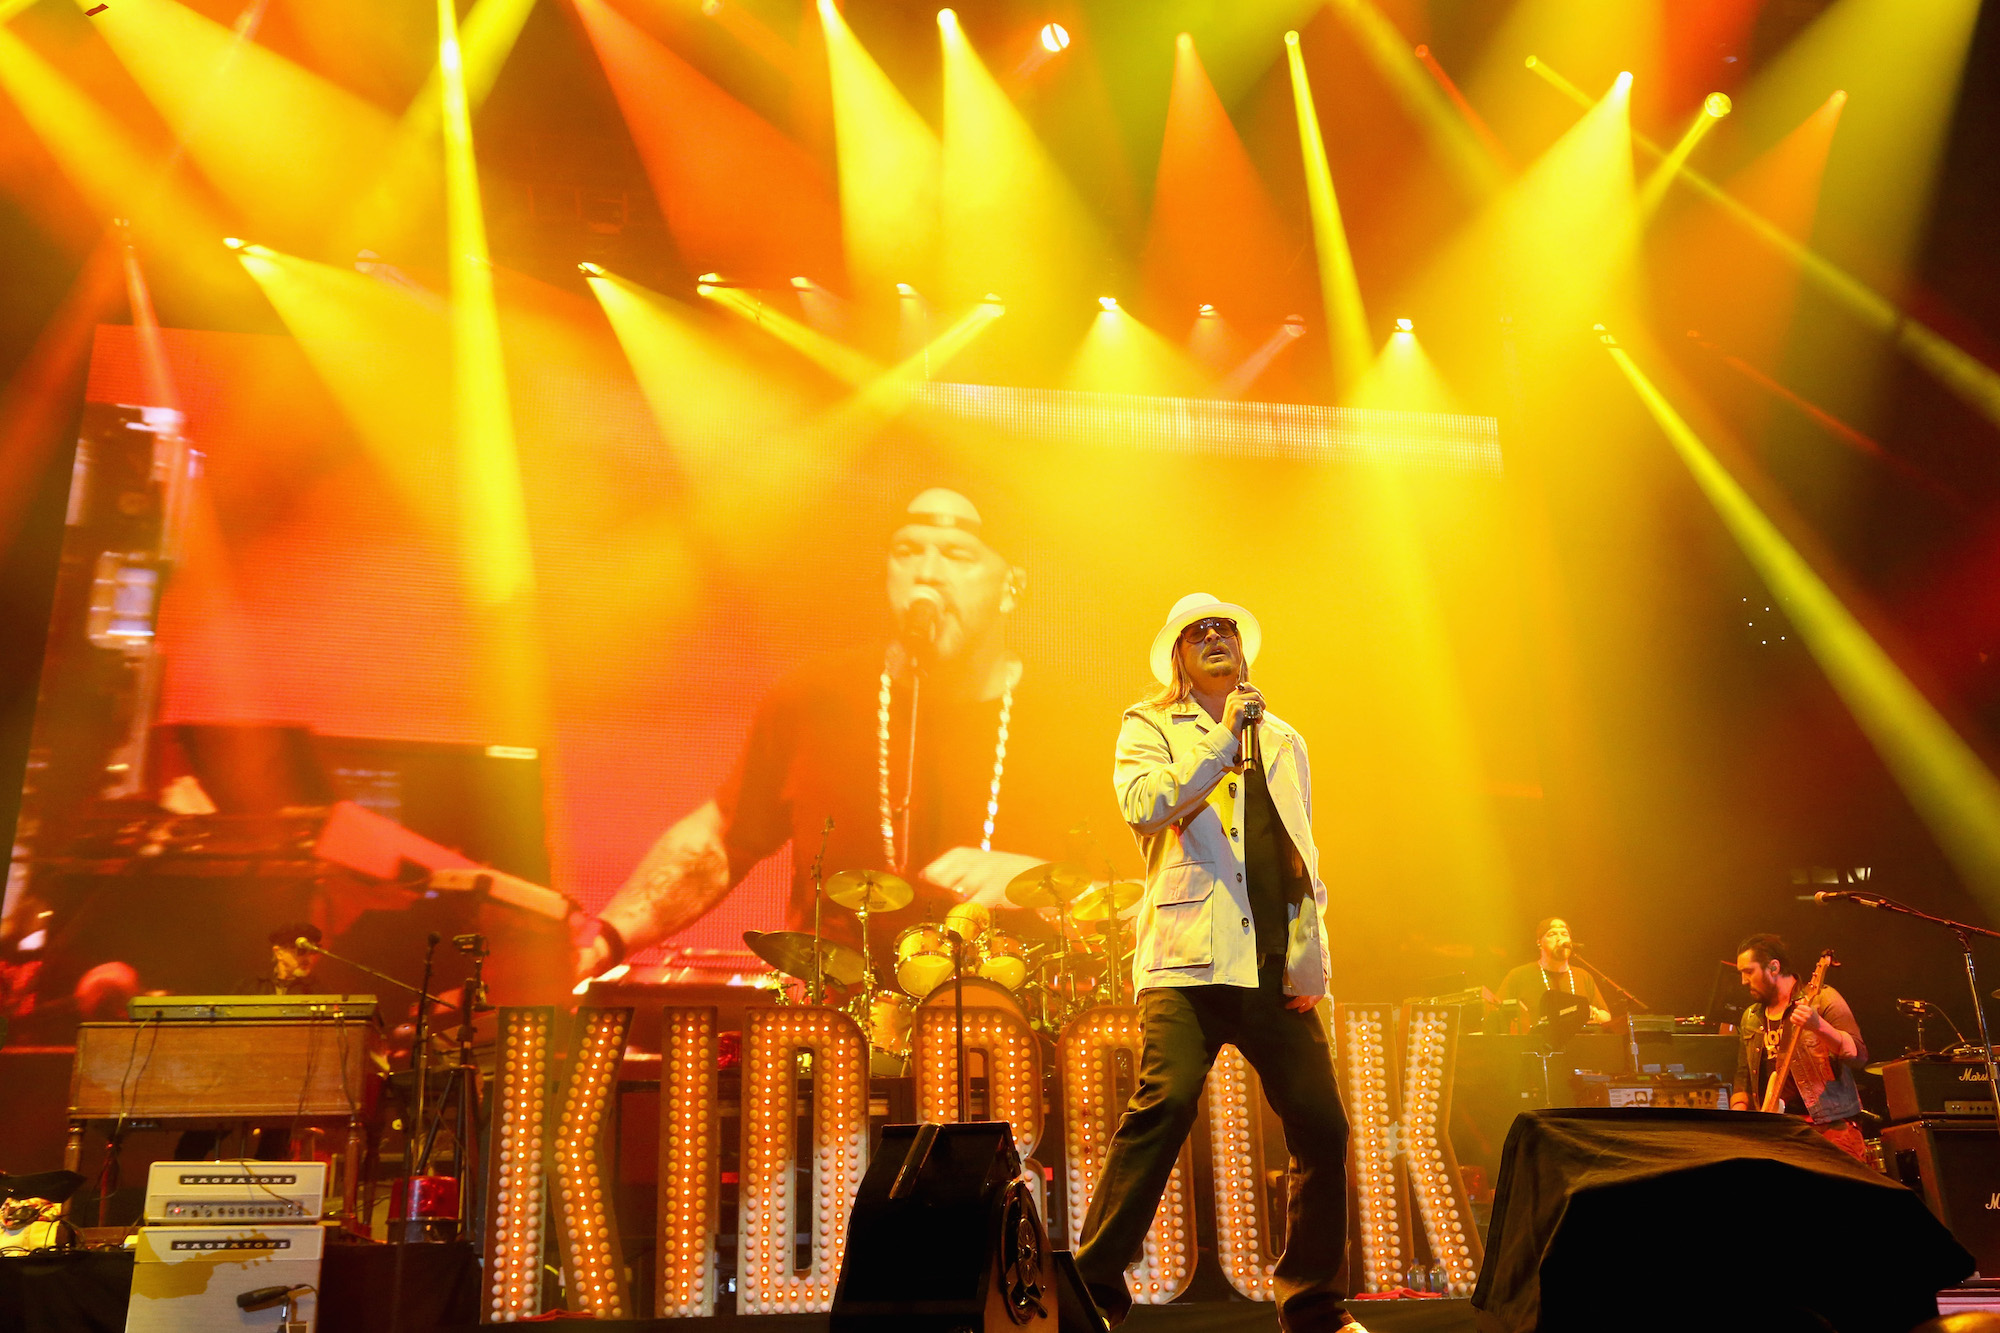 Kid Rock on stage under yellow and orange lighting